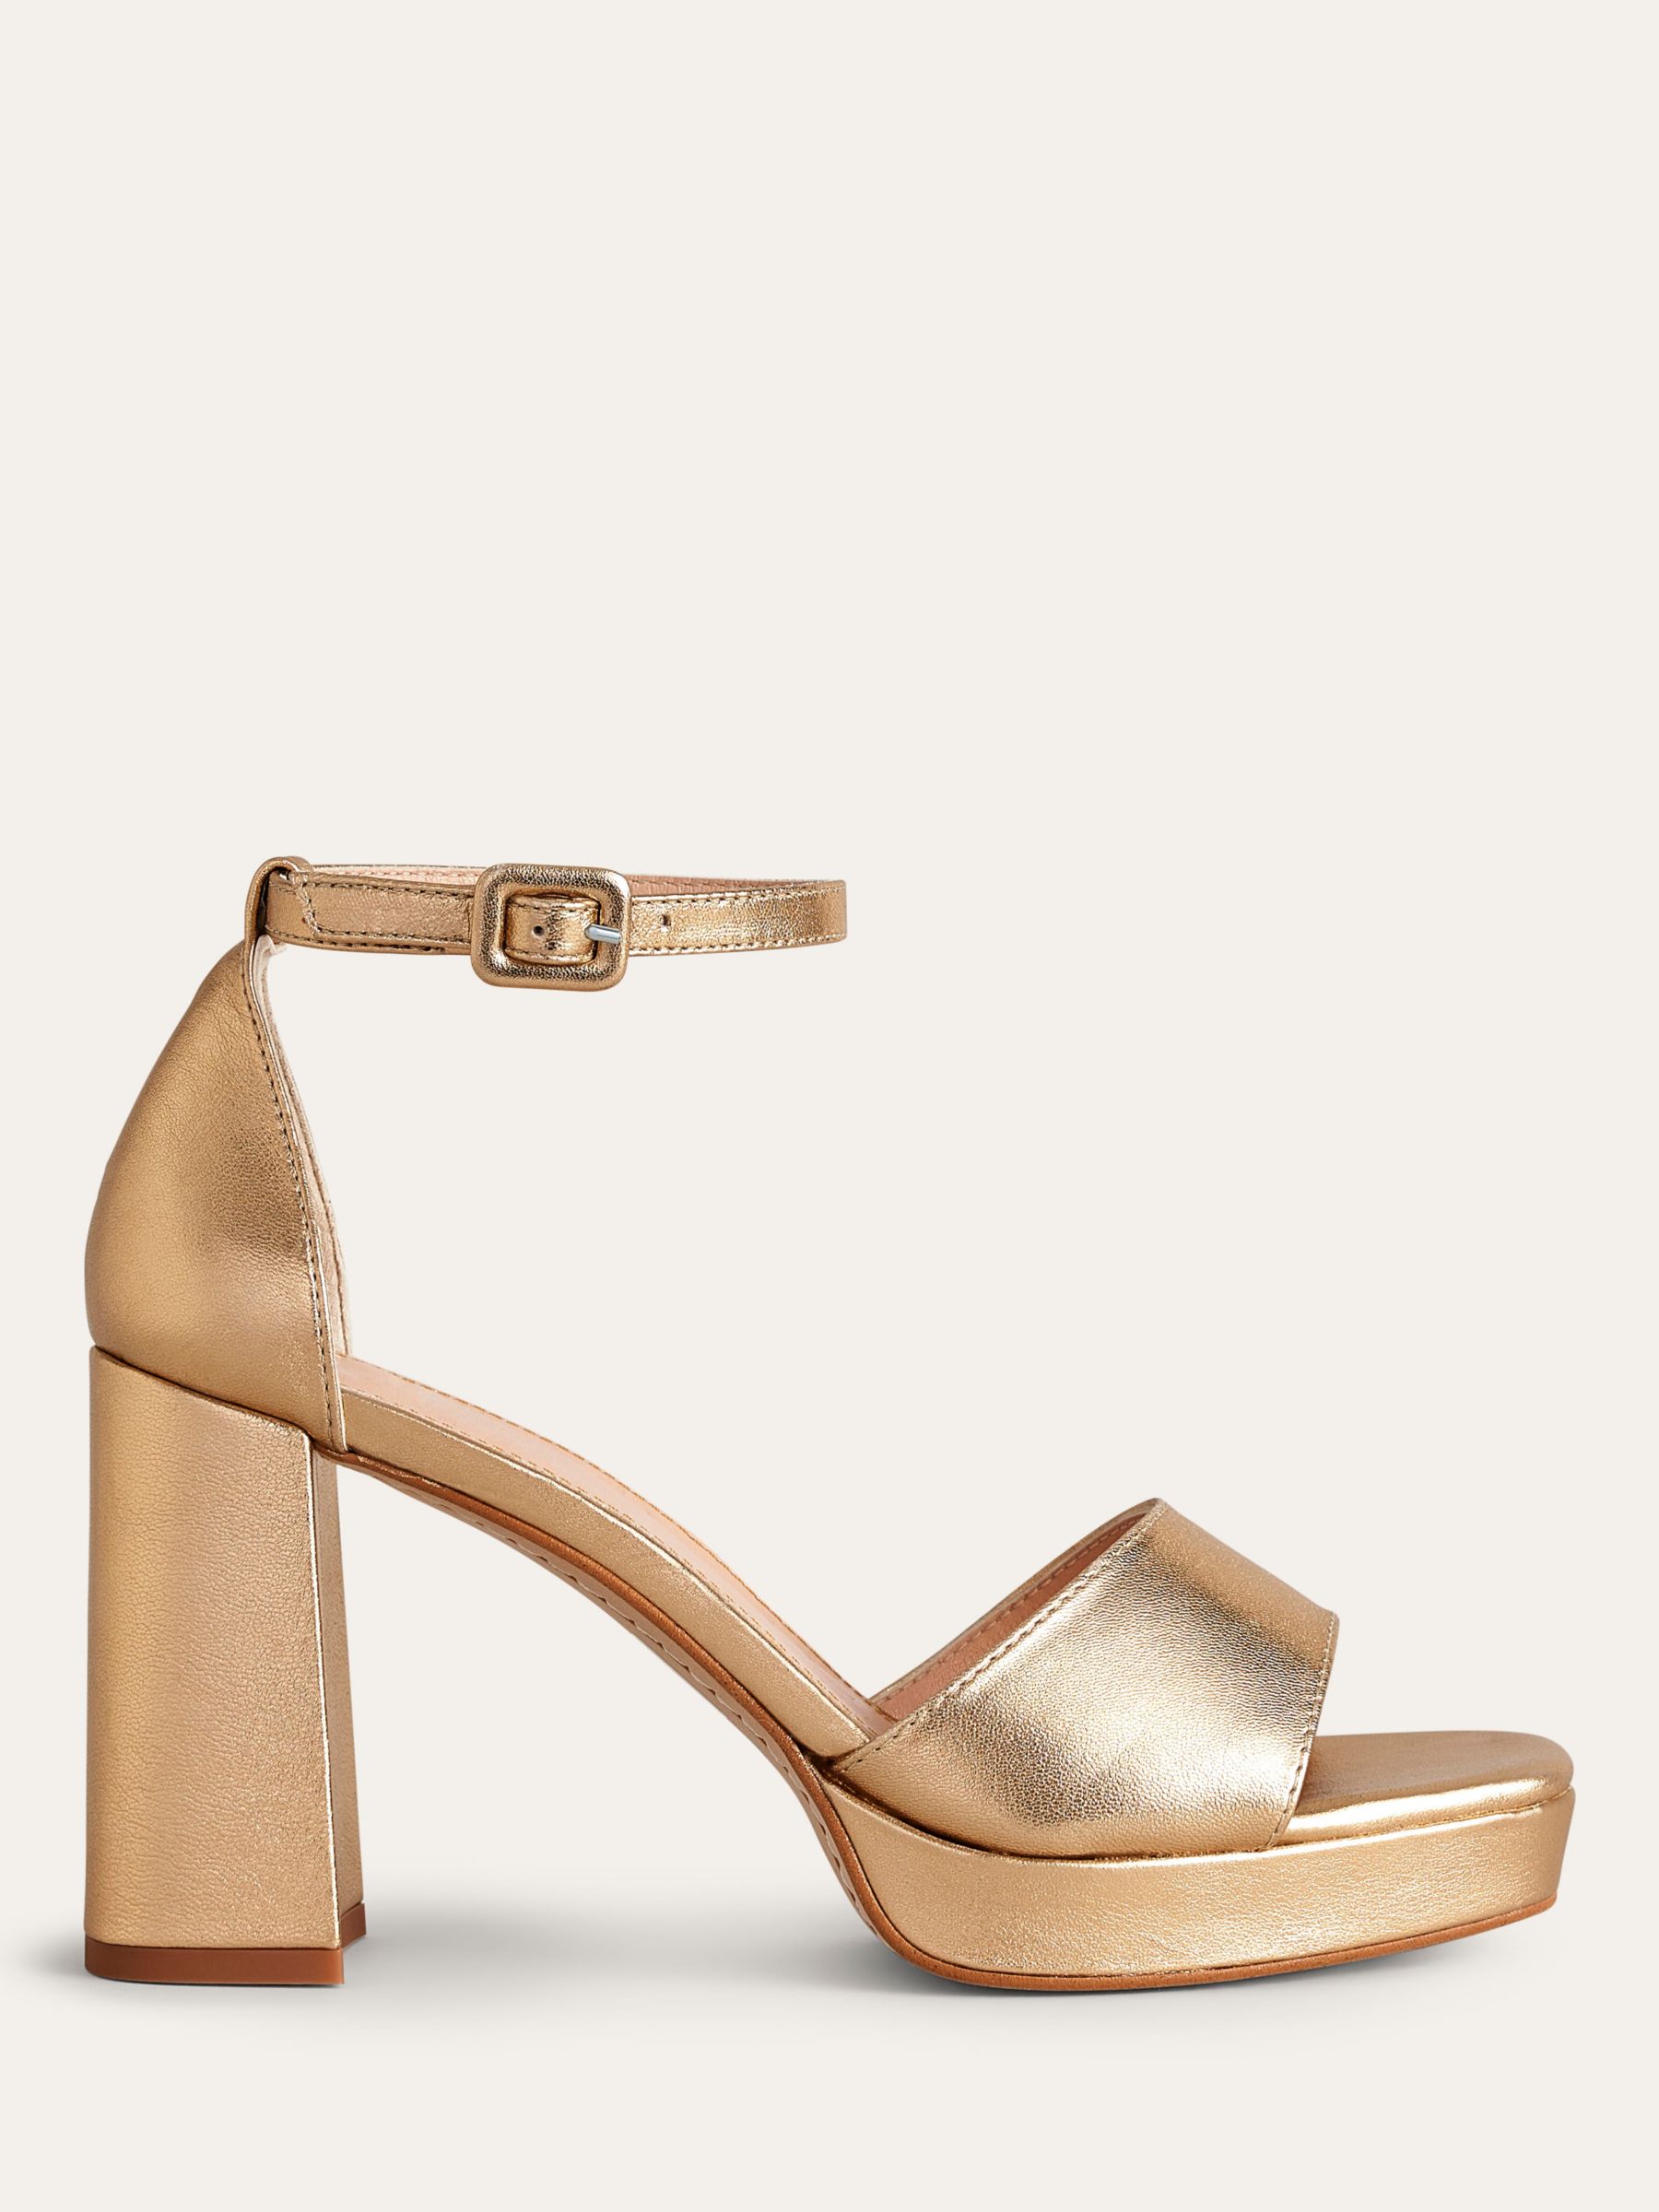 Boden Leather Block Heel Sandals, Gold, 4